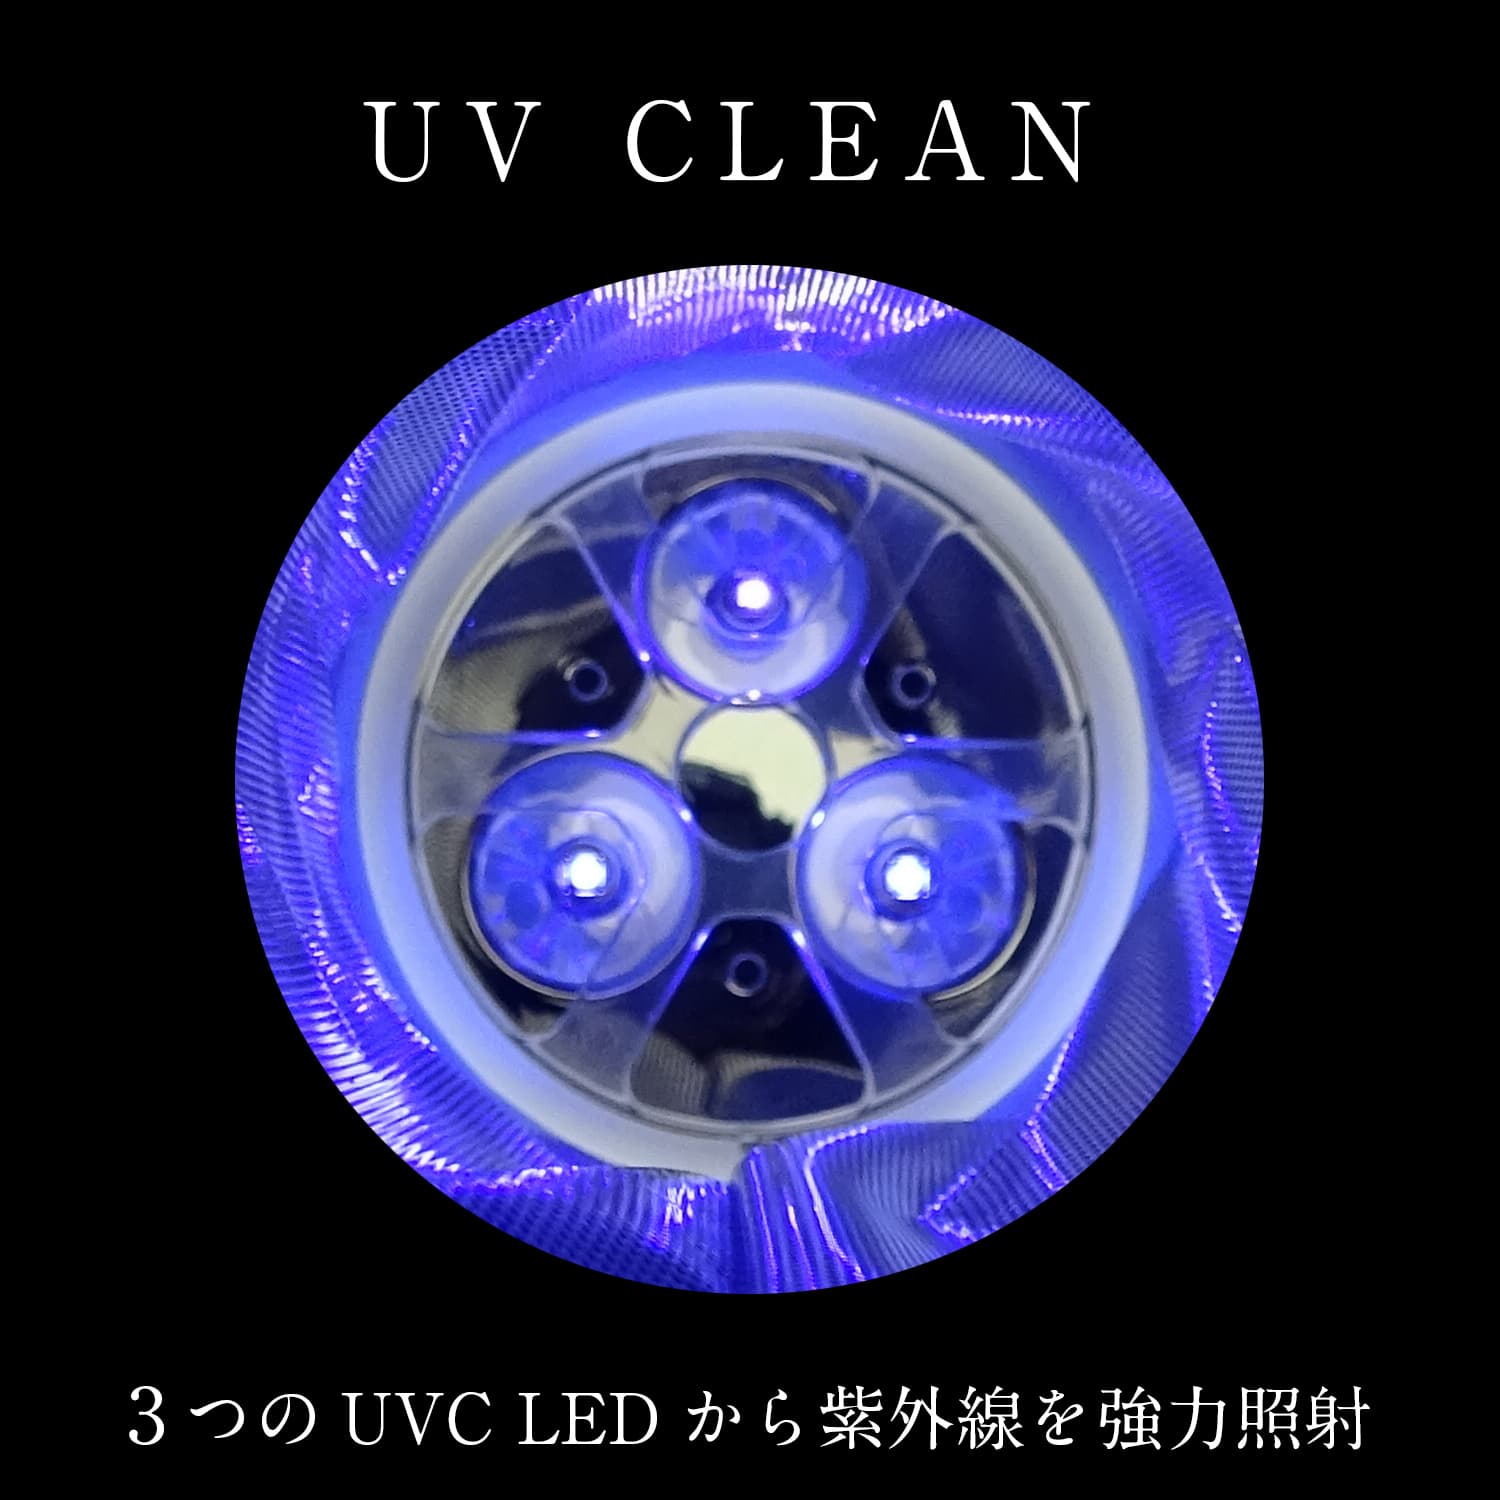 UV CLEAN, 遠紫外線,殺菌,滅菌, 除菌,抗菌,2021年1月15日発売,ゆーぶい くりーん